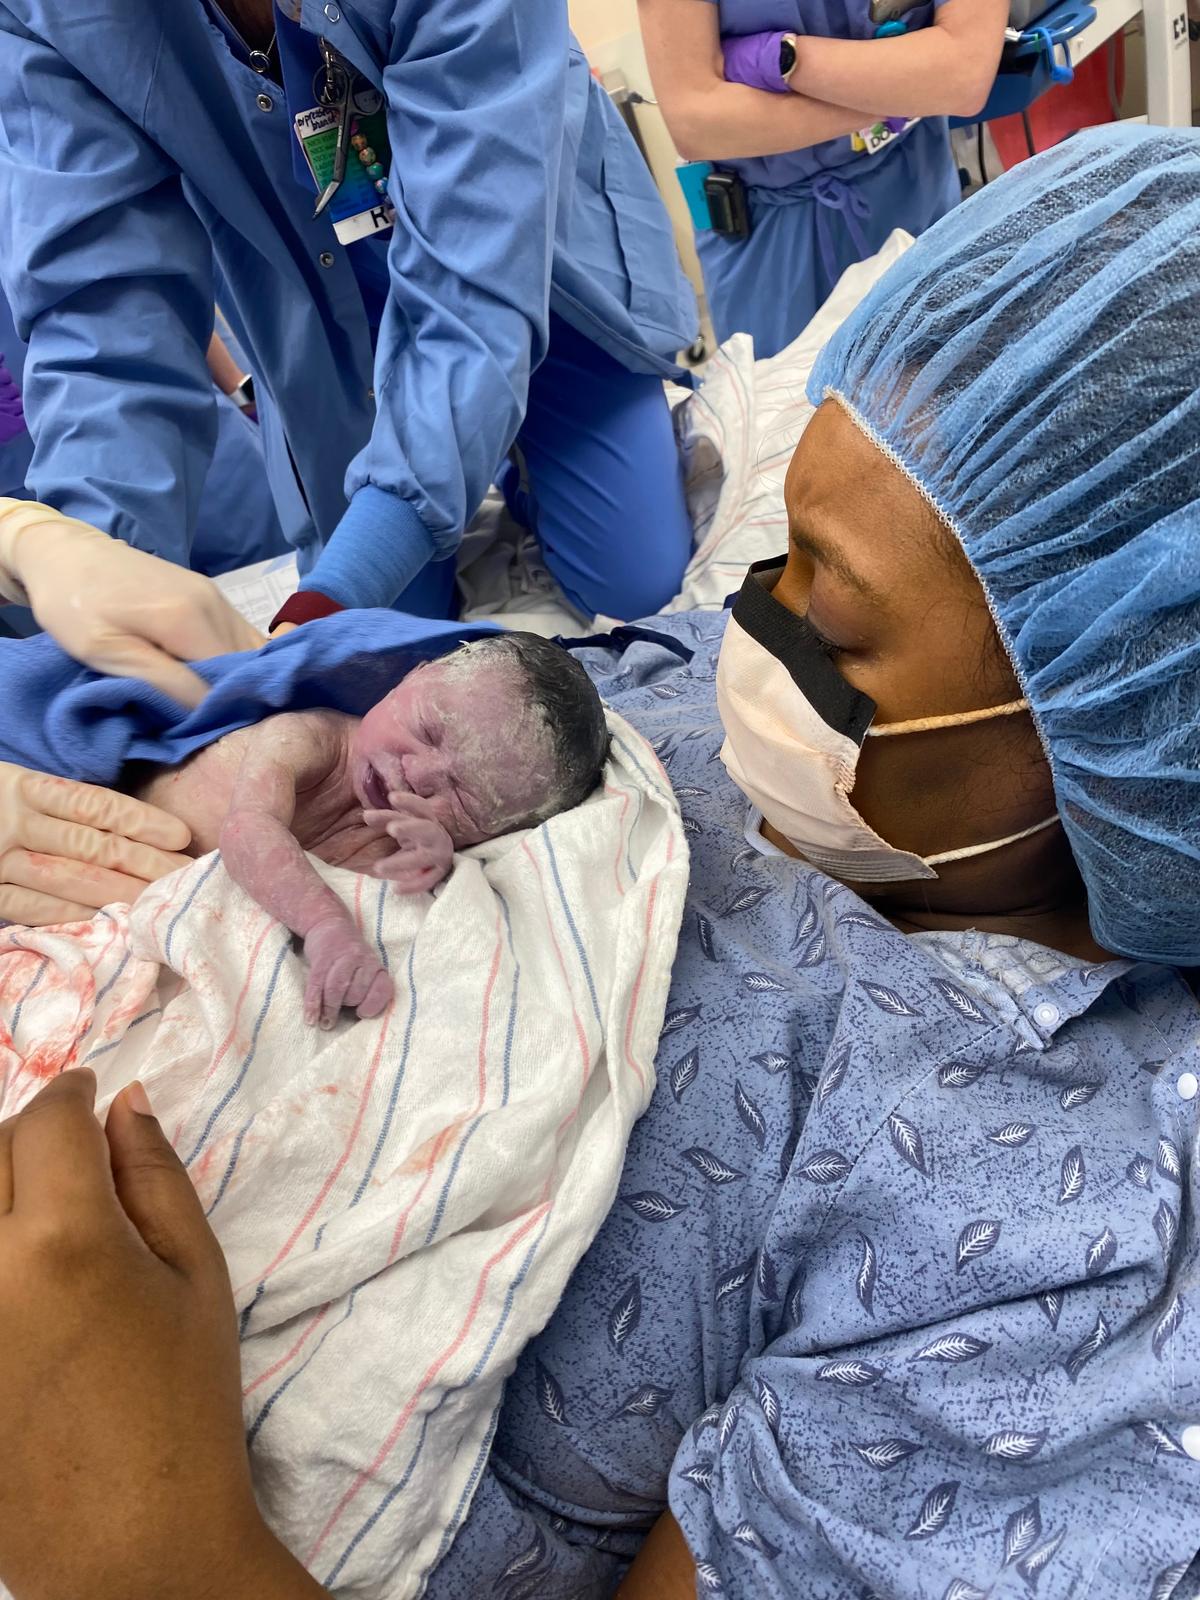 Kenyatta with newborn baby Denver. (Courtesy of the Coleman family)